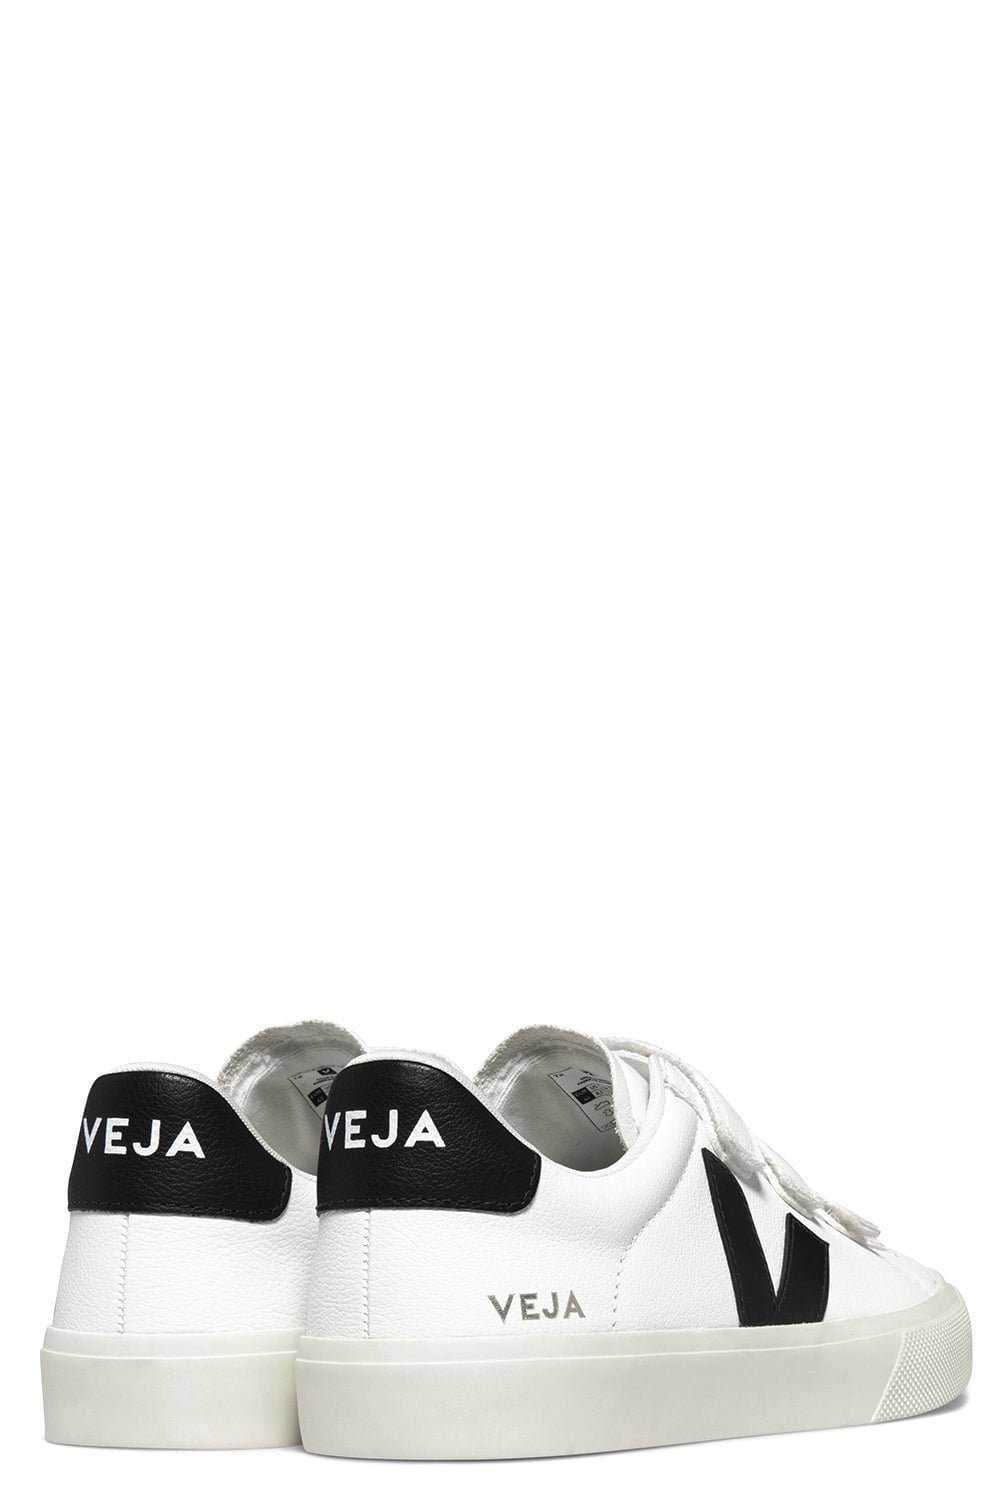 VEJA-Recife Sneaker - Extra White Black-